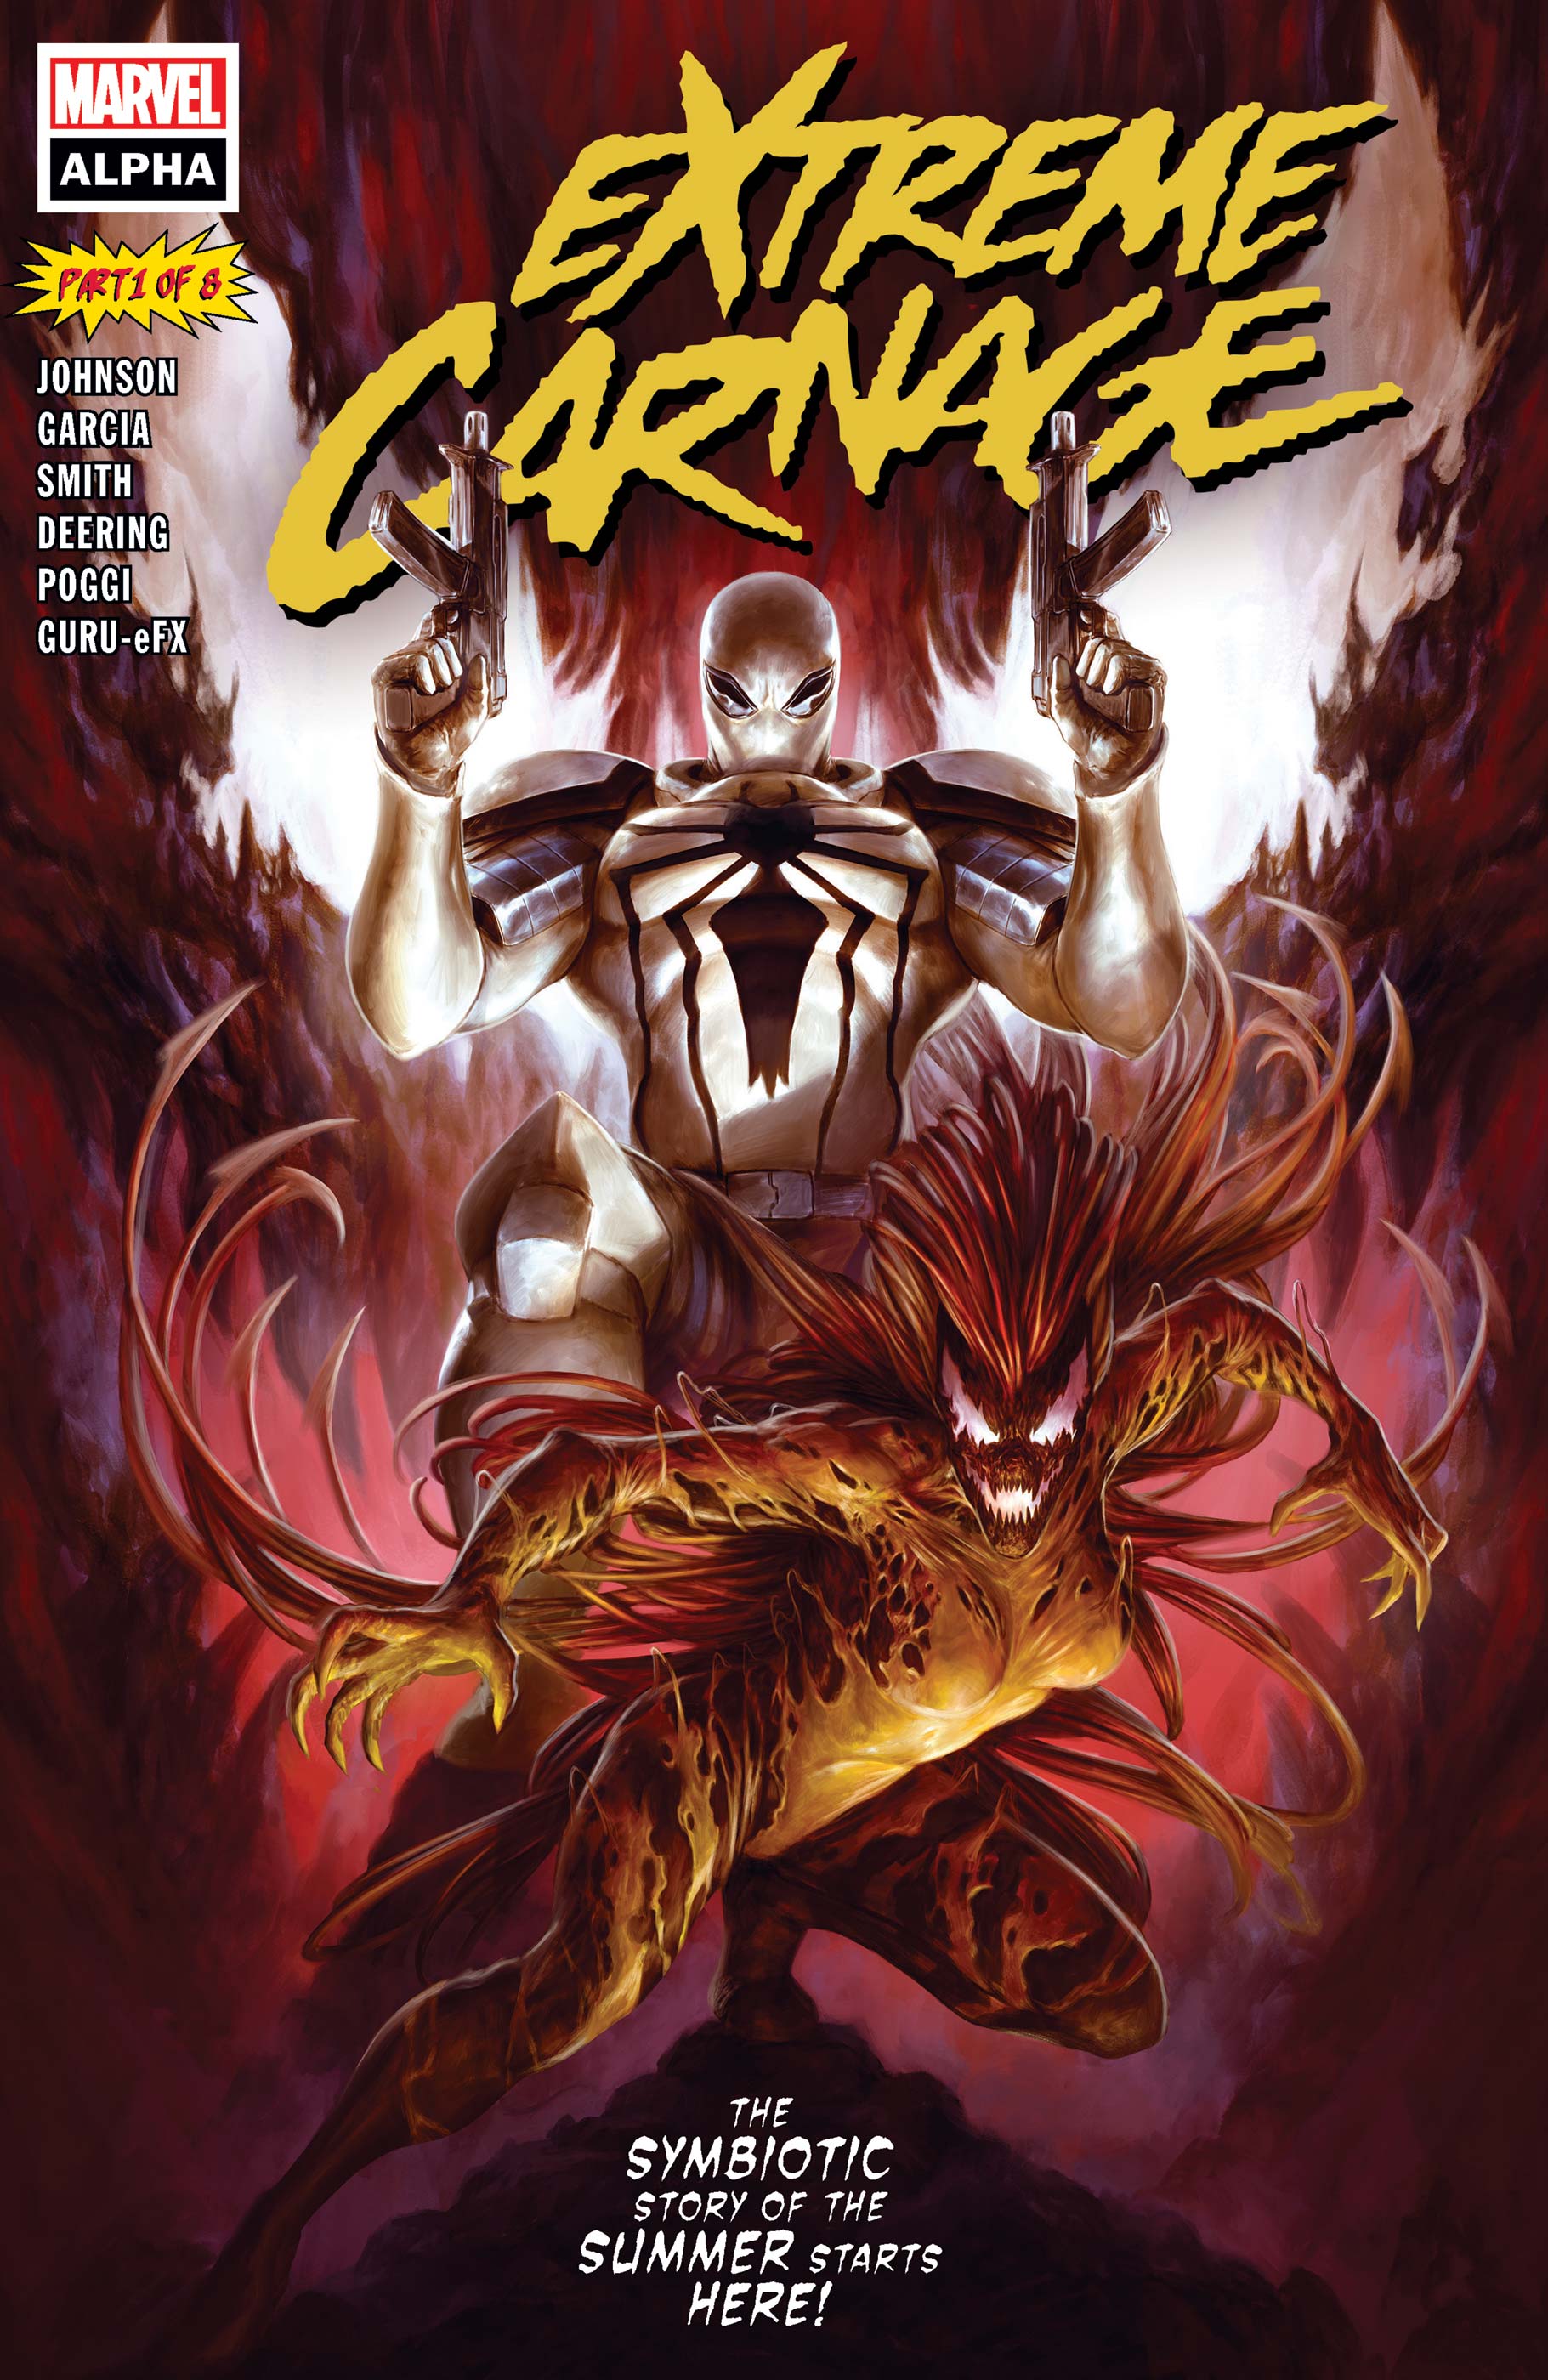 Extreme Carnage Alpha (2021) #1